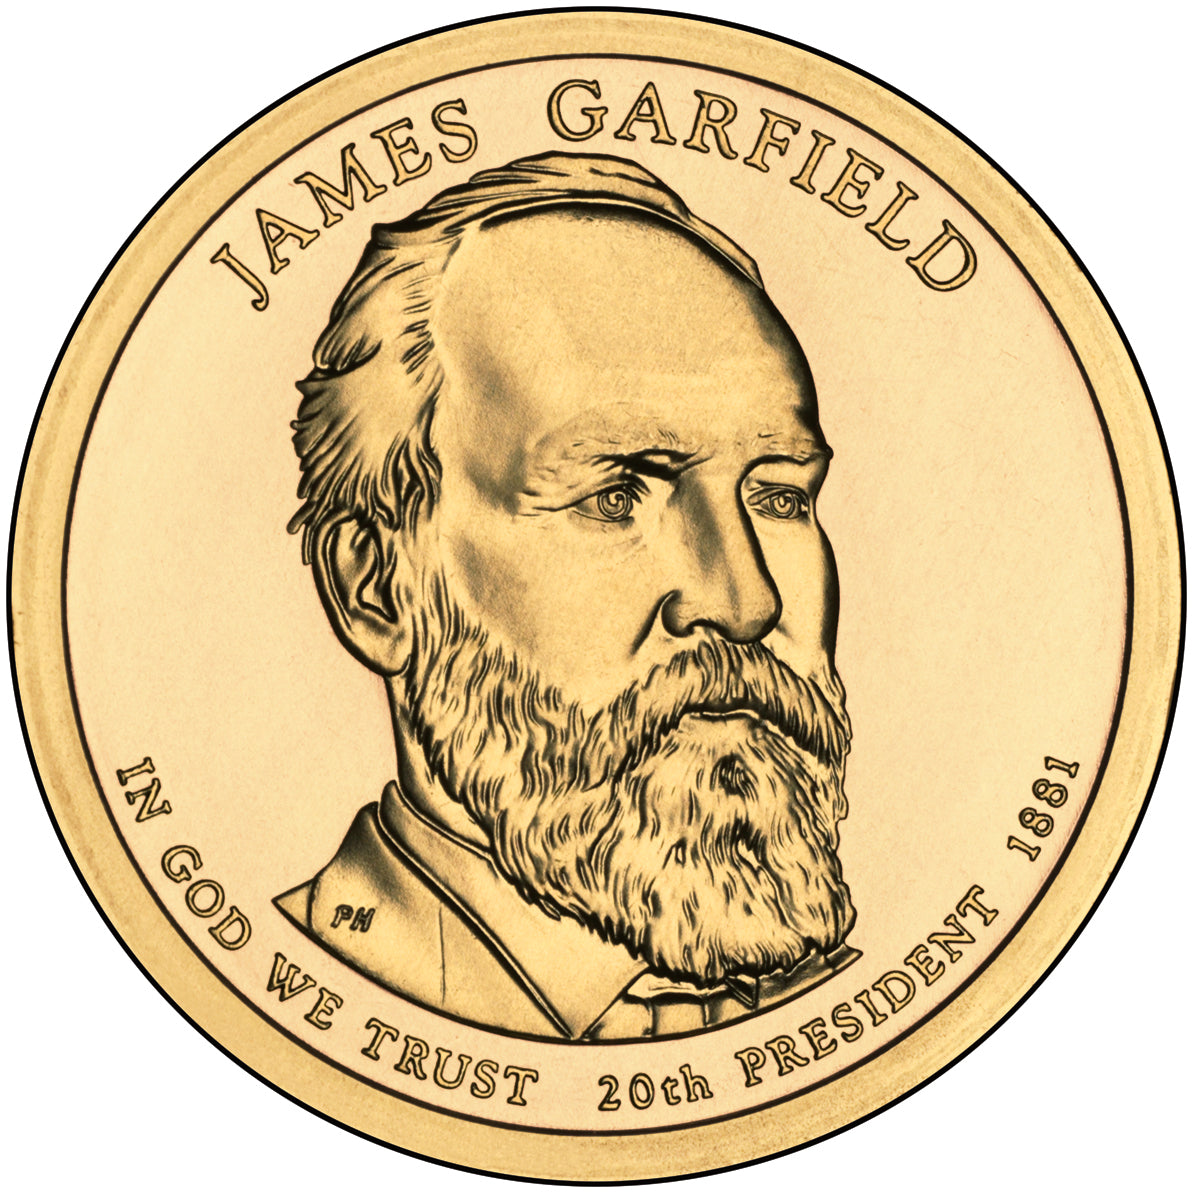 James Garfield Presidential Dollar Lapel Pin, Uncirculated One Gold Dollar Coin Enamel Pin